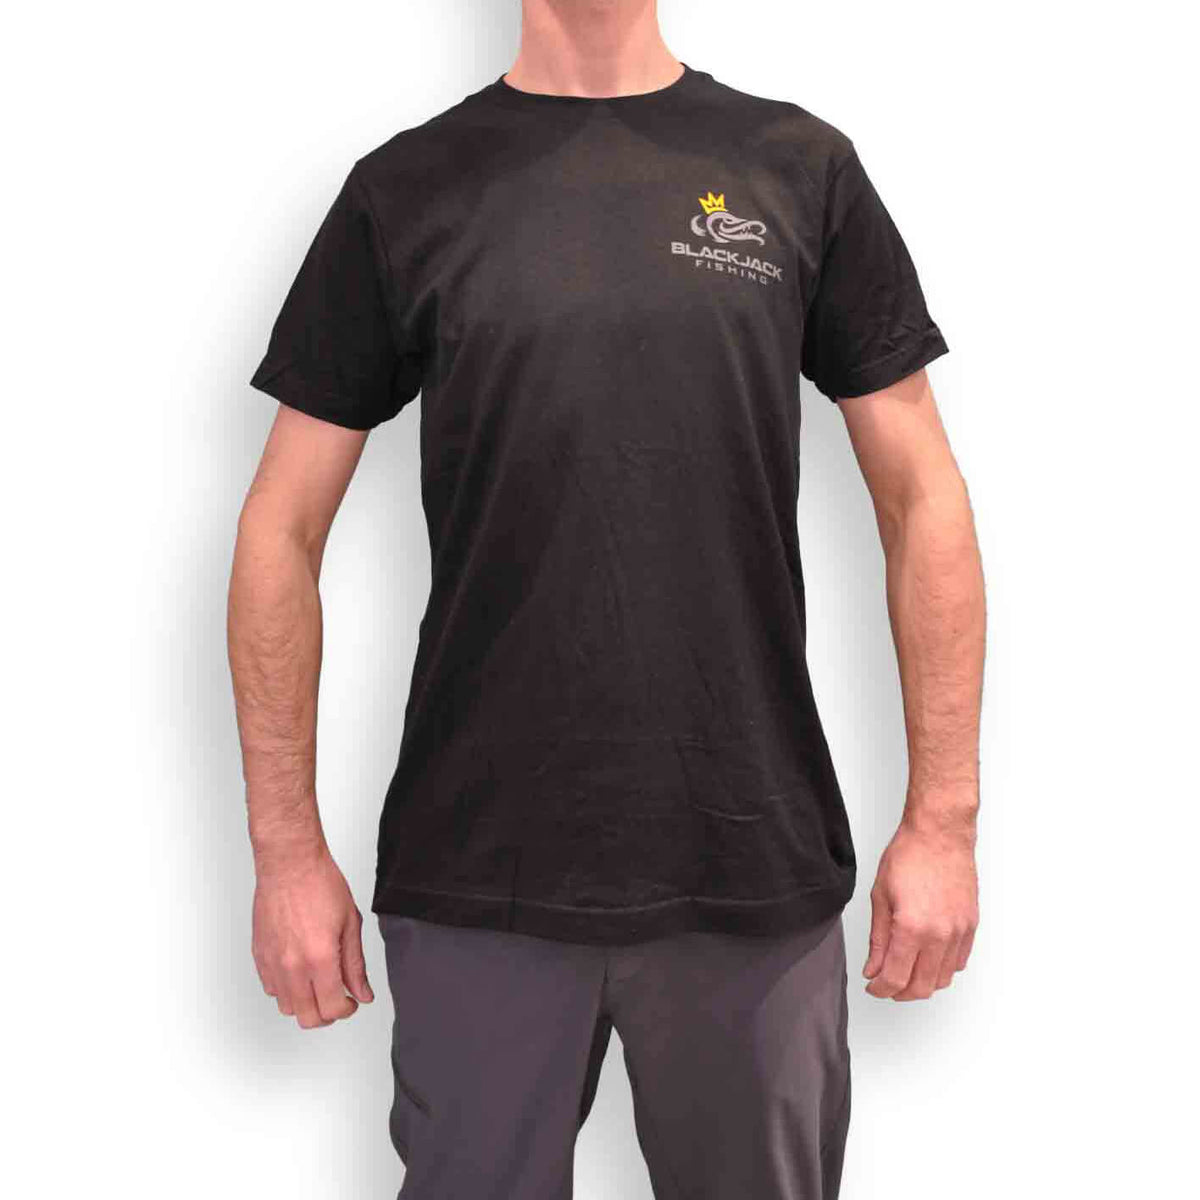 Black Jack Fishing Unisex T-Shirt | Fishing Apparel Black / XL